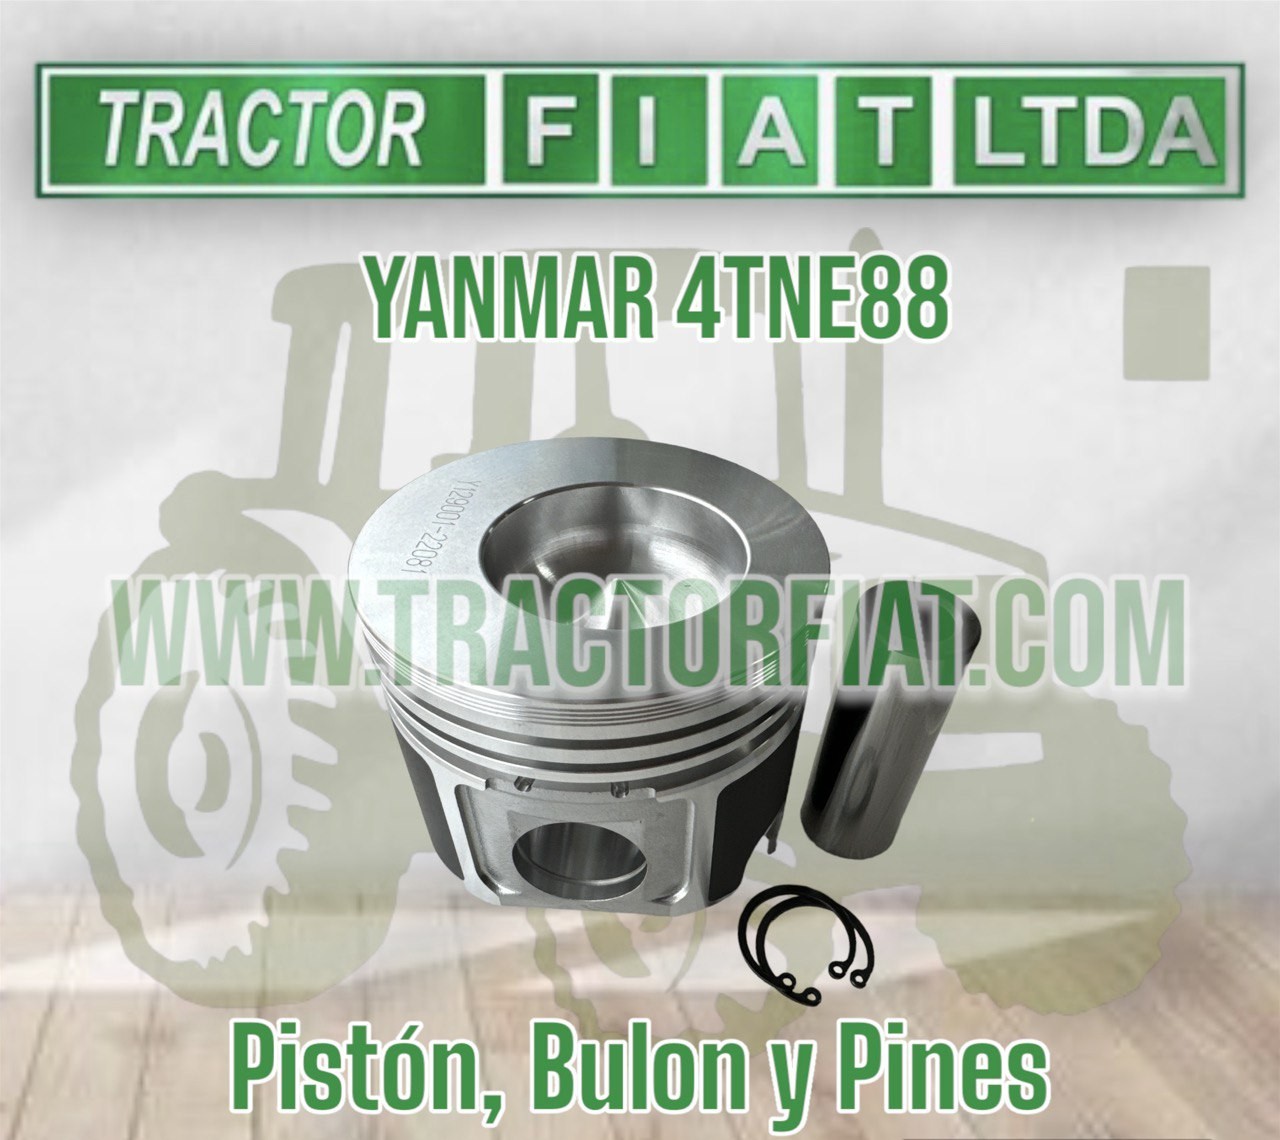 PISTON, BULON Y PINES- MOTOR YANMAR 4TNE88